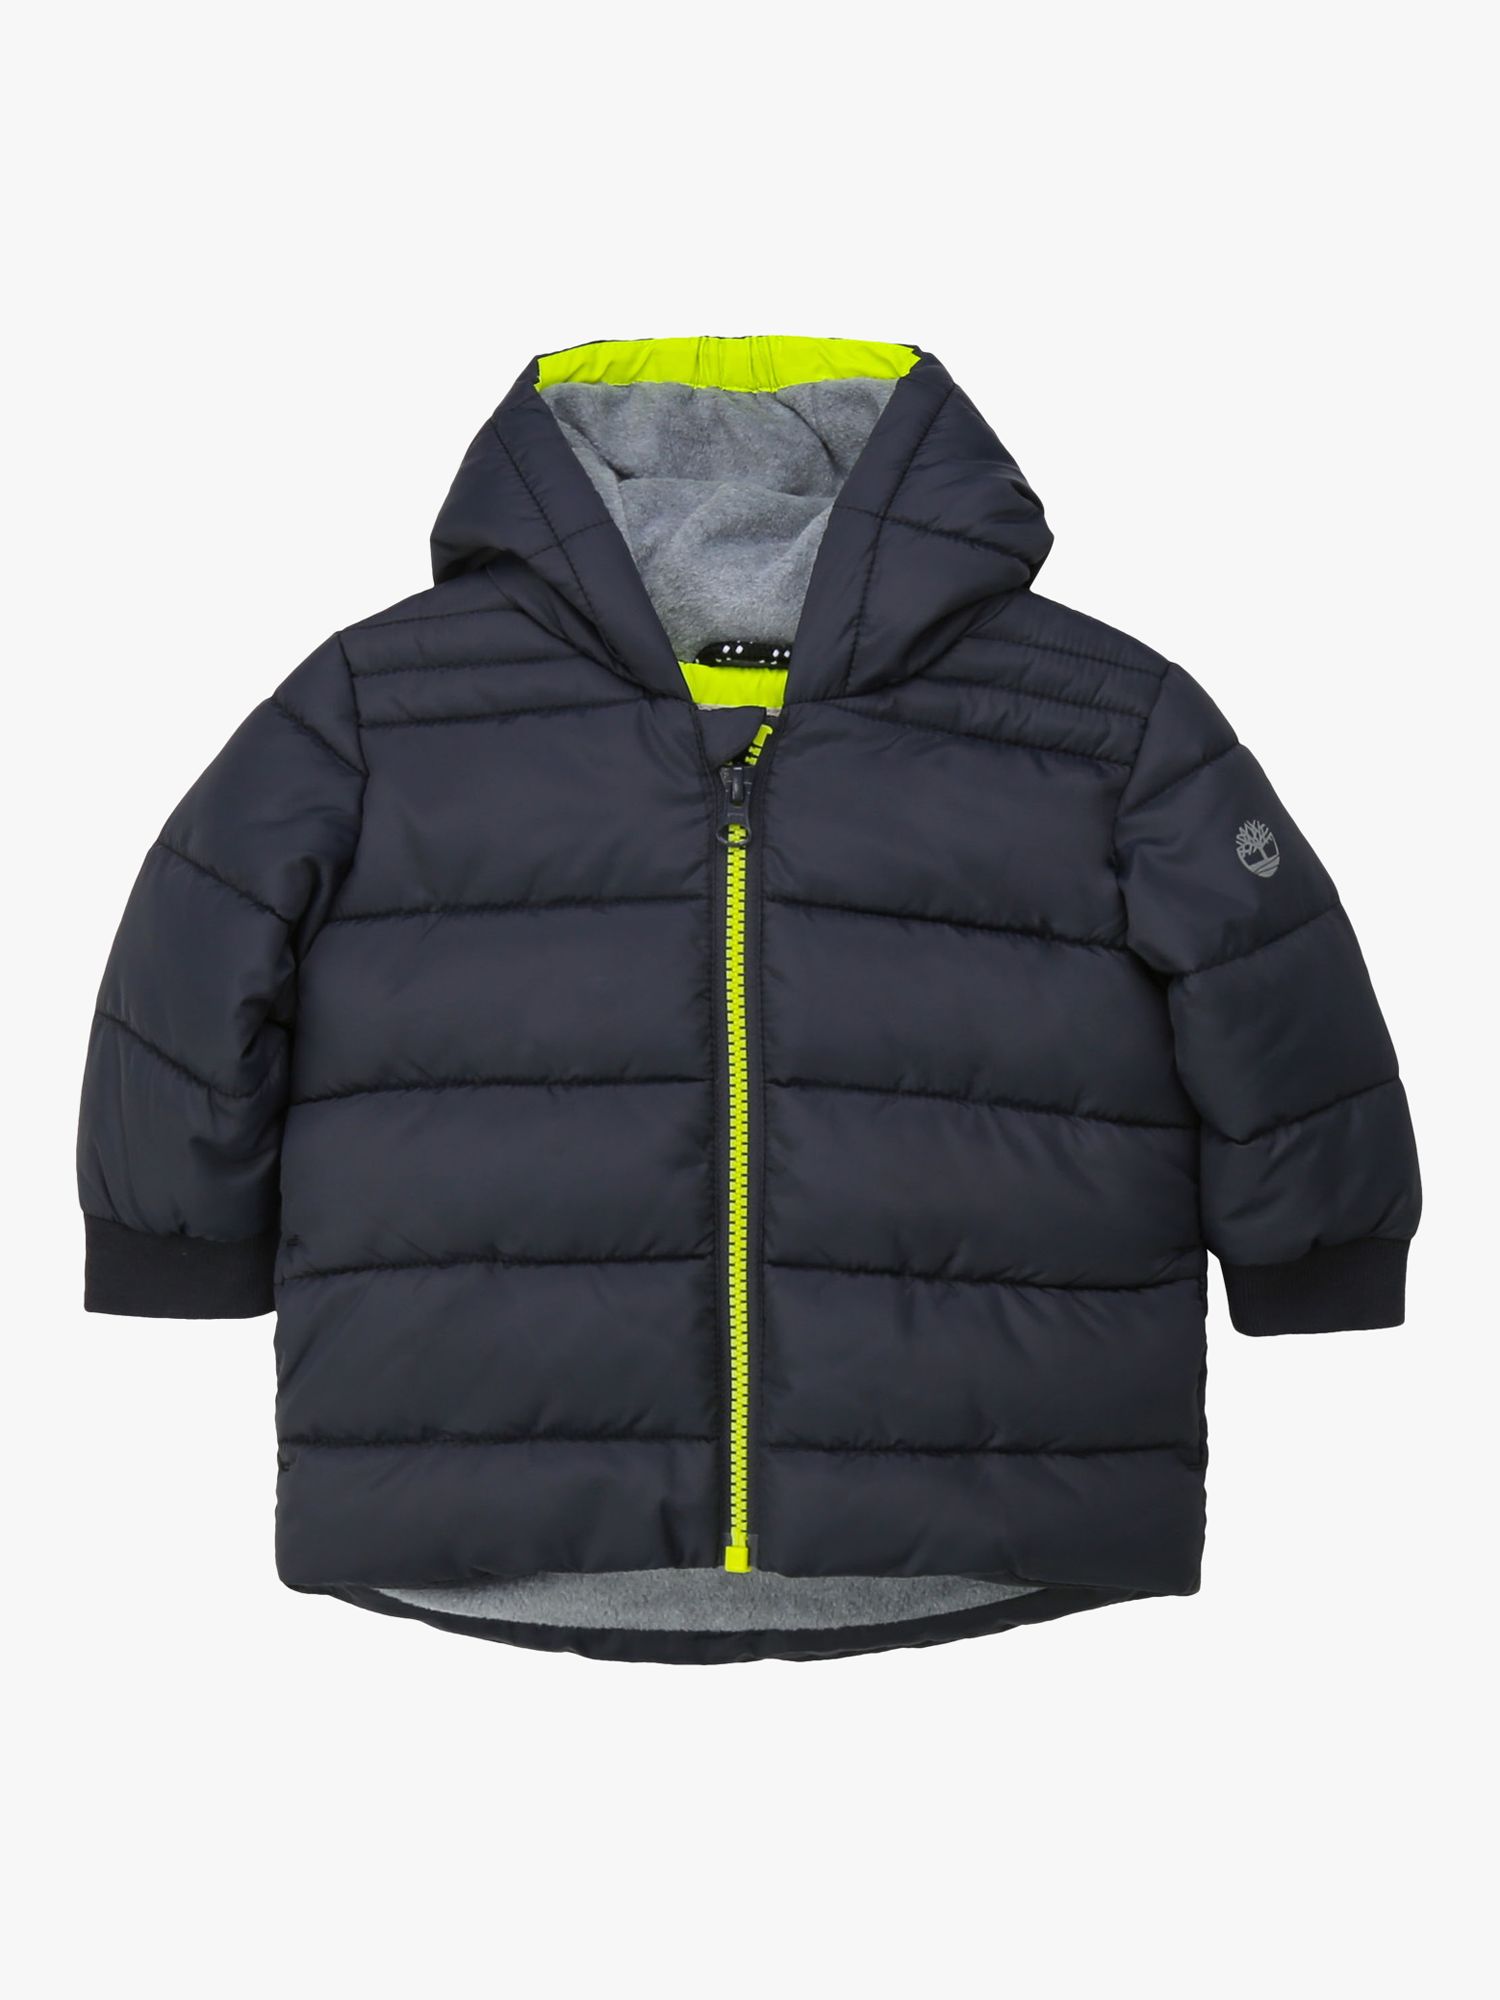 Timberland Baby Waterproof Hooded Puffer Jacket at John Lewis & Partners